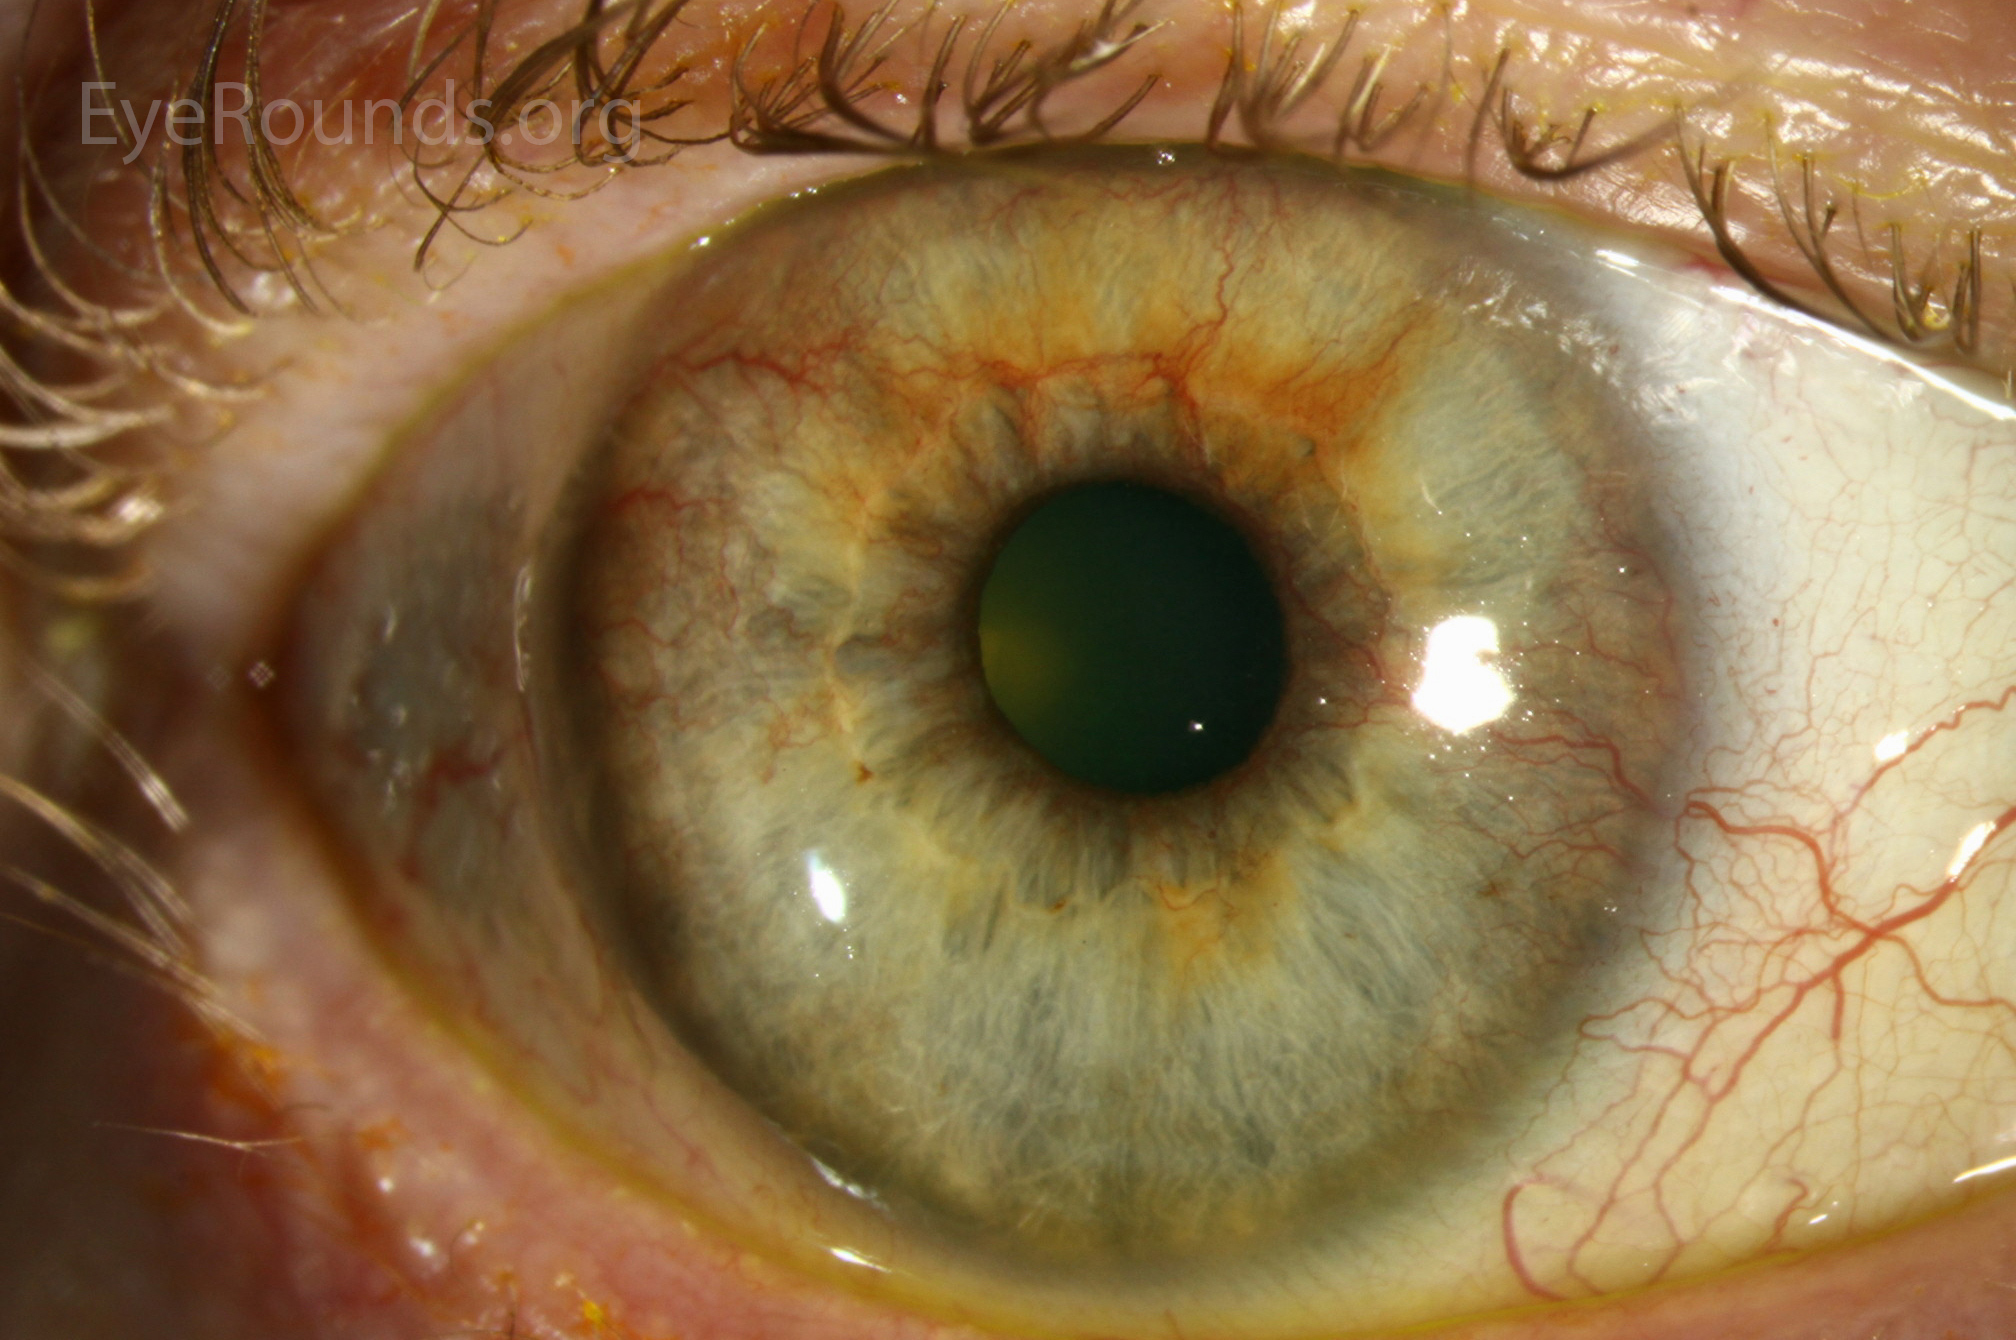 Neovascularization of the iris os